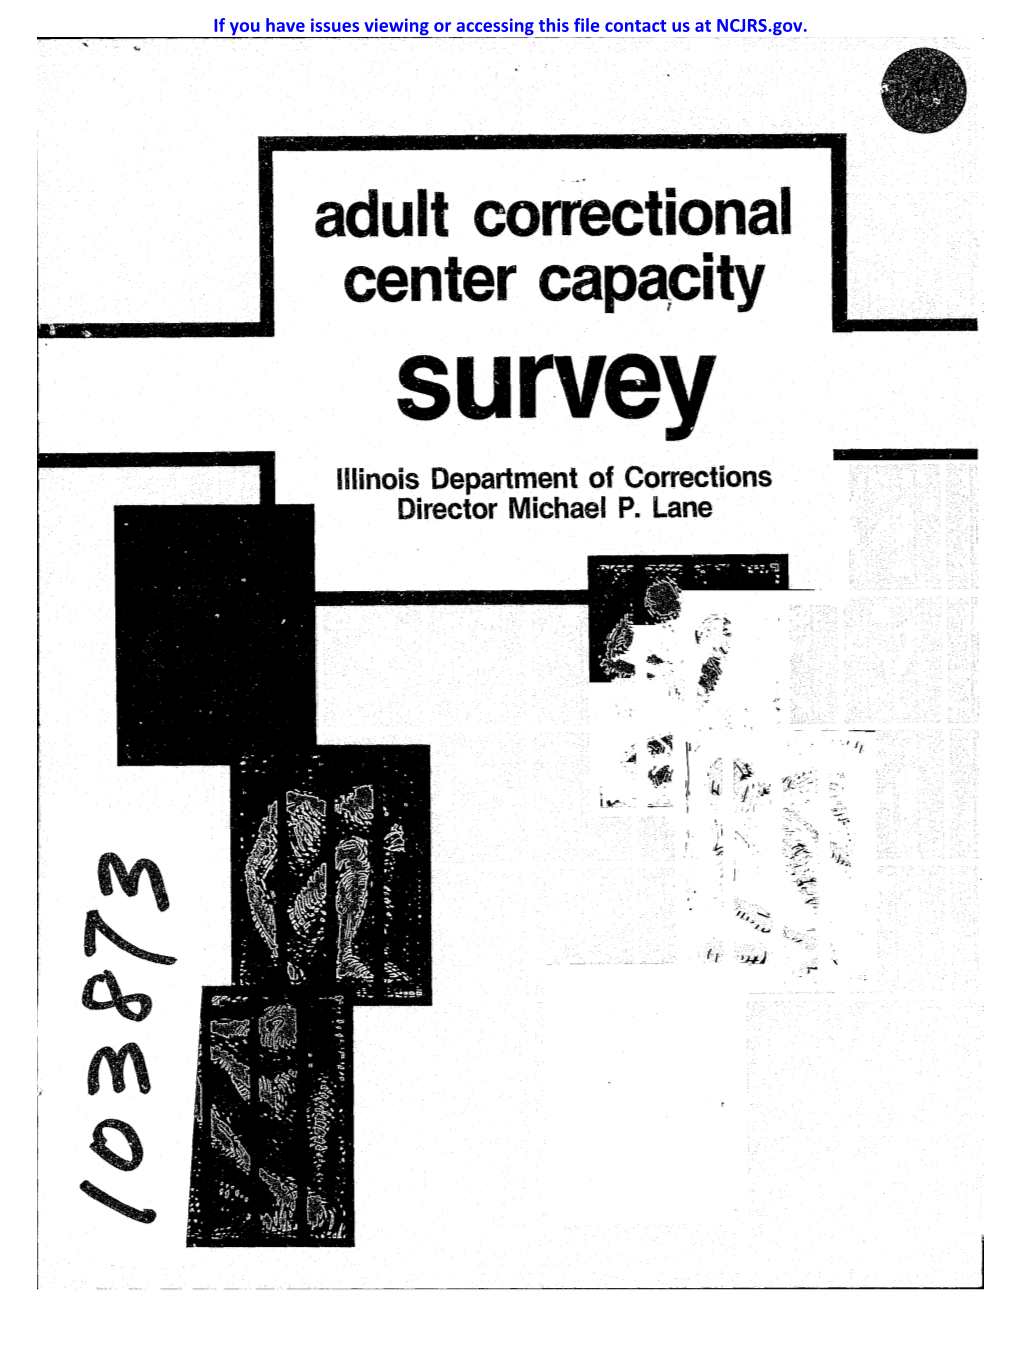 Adult Correctional Center Cap~City Survey Illinois Department of Corrections Director Michael P